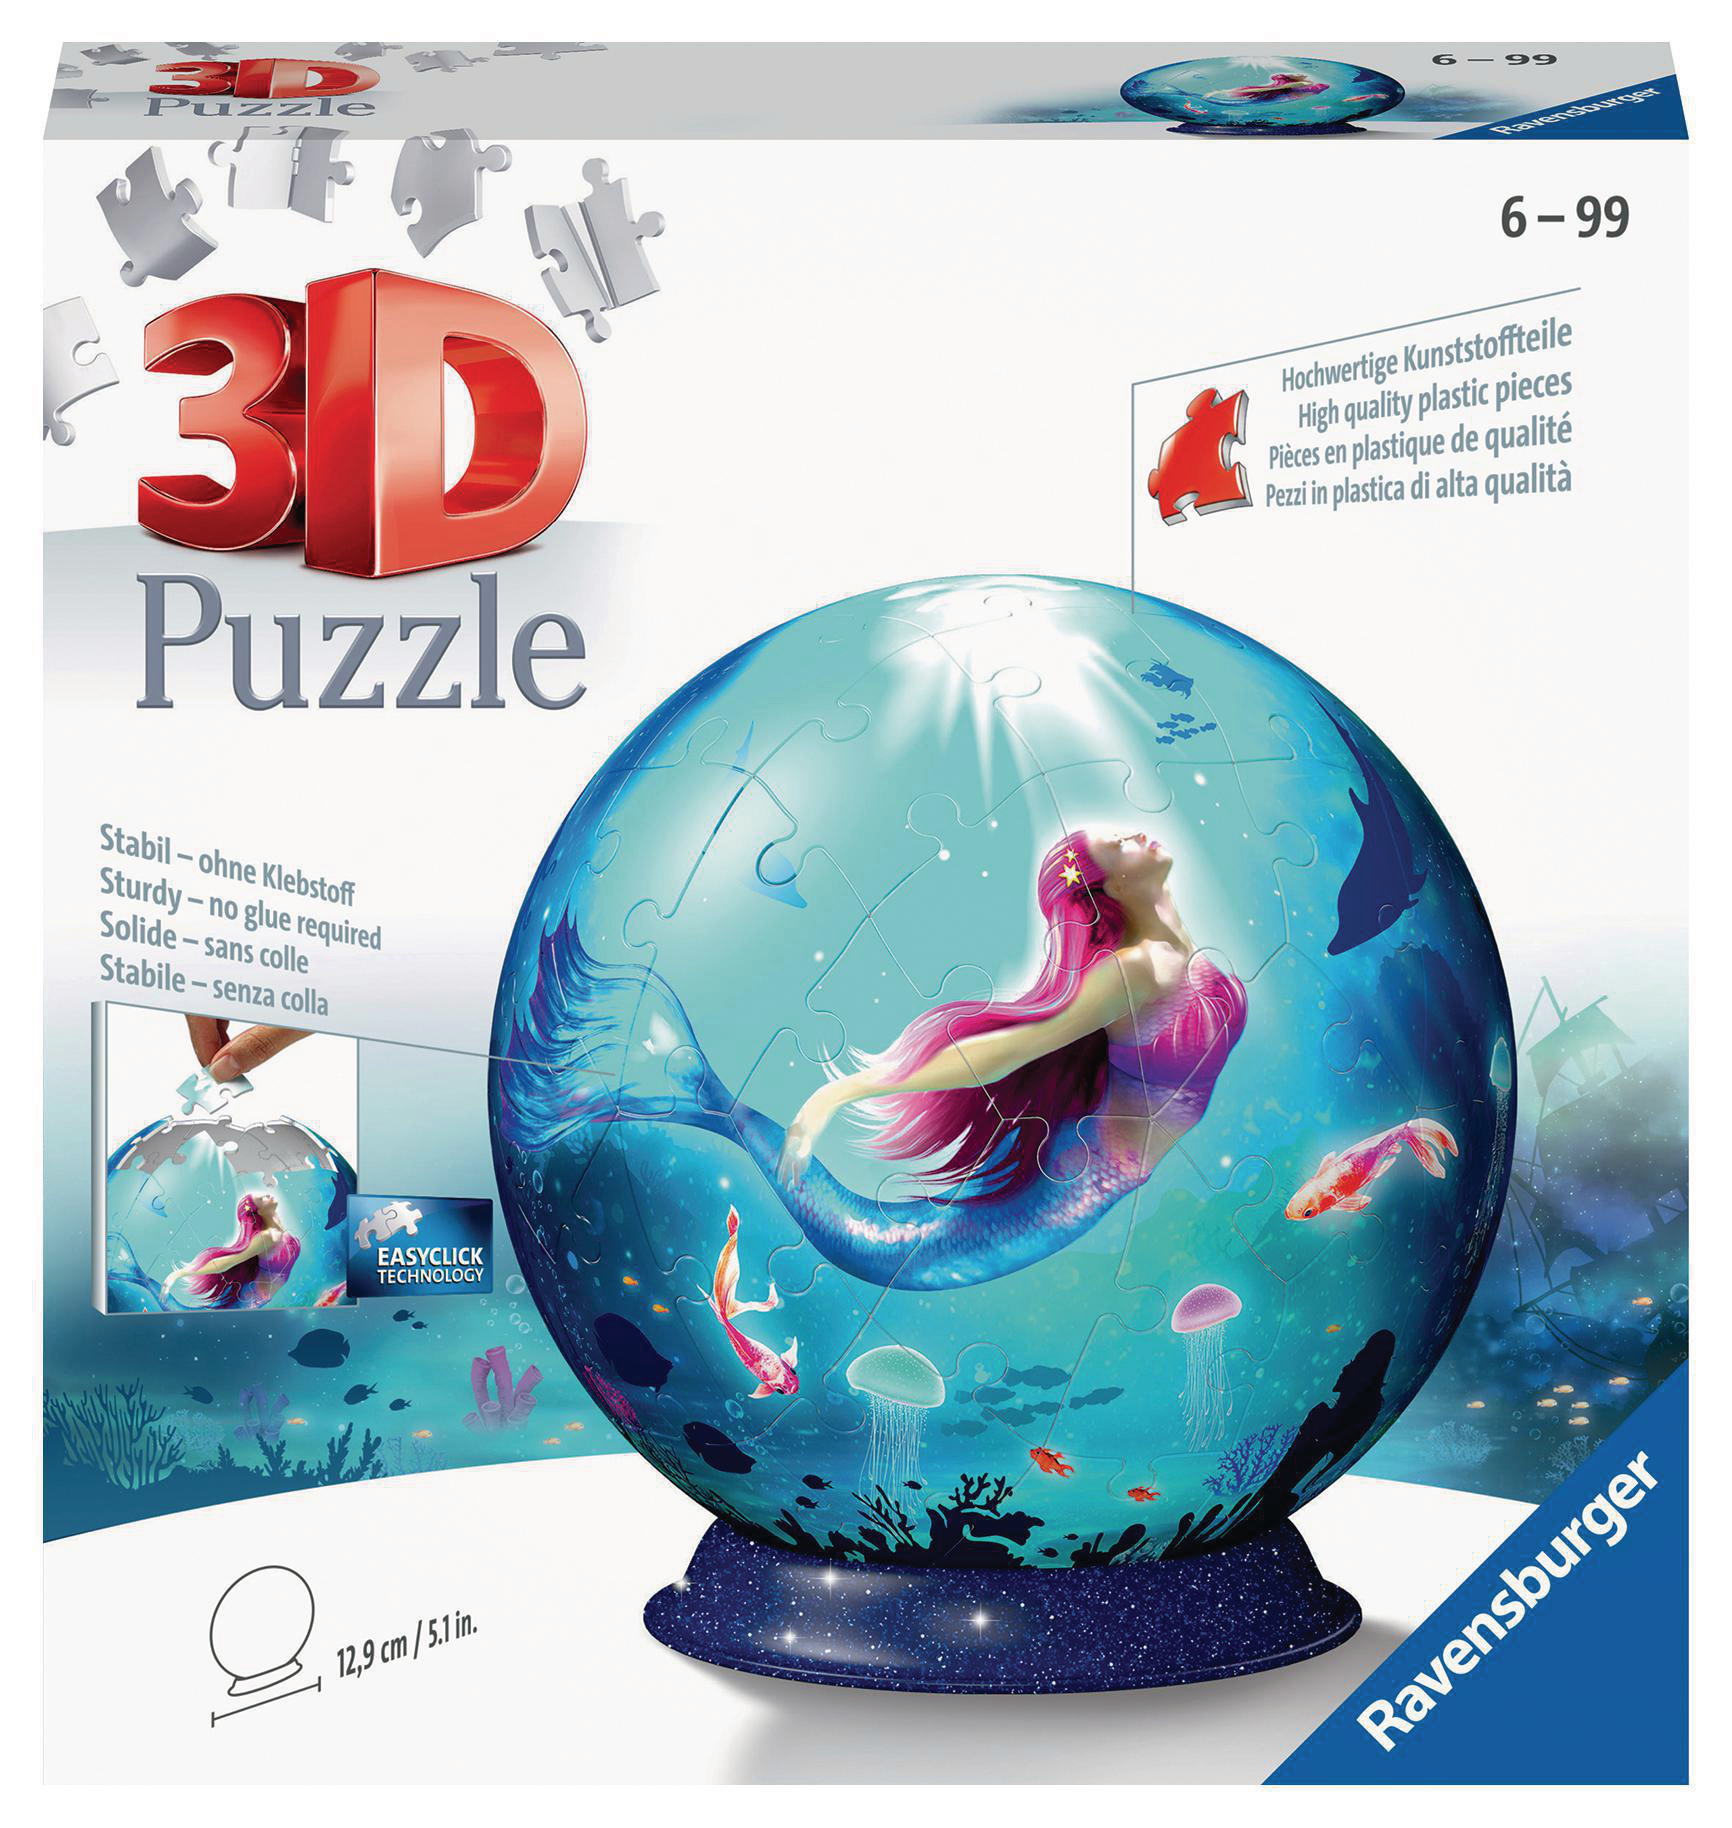 RAVENSBURGER Bezaubernde Puzzle Mehrfarbig Meerjungfrauen 3D